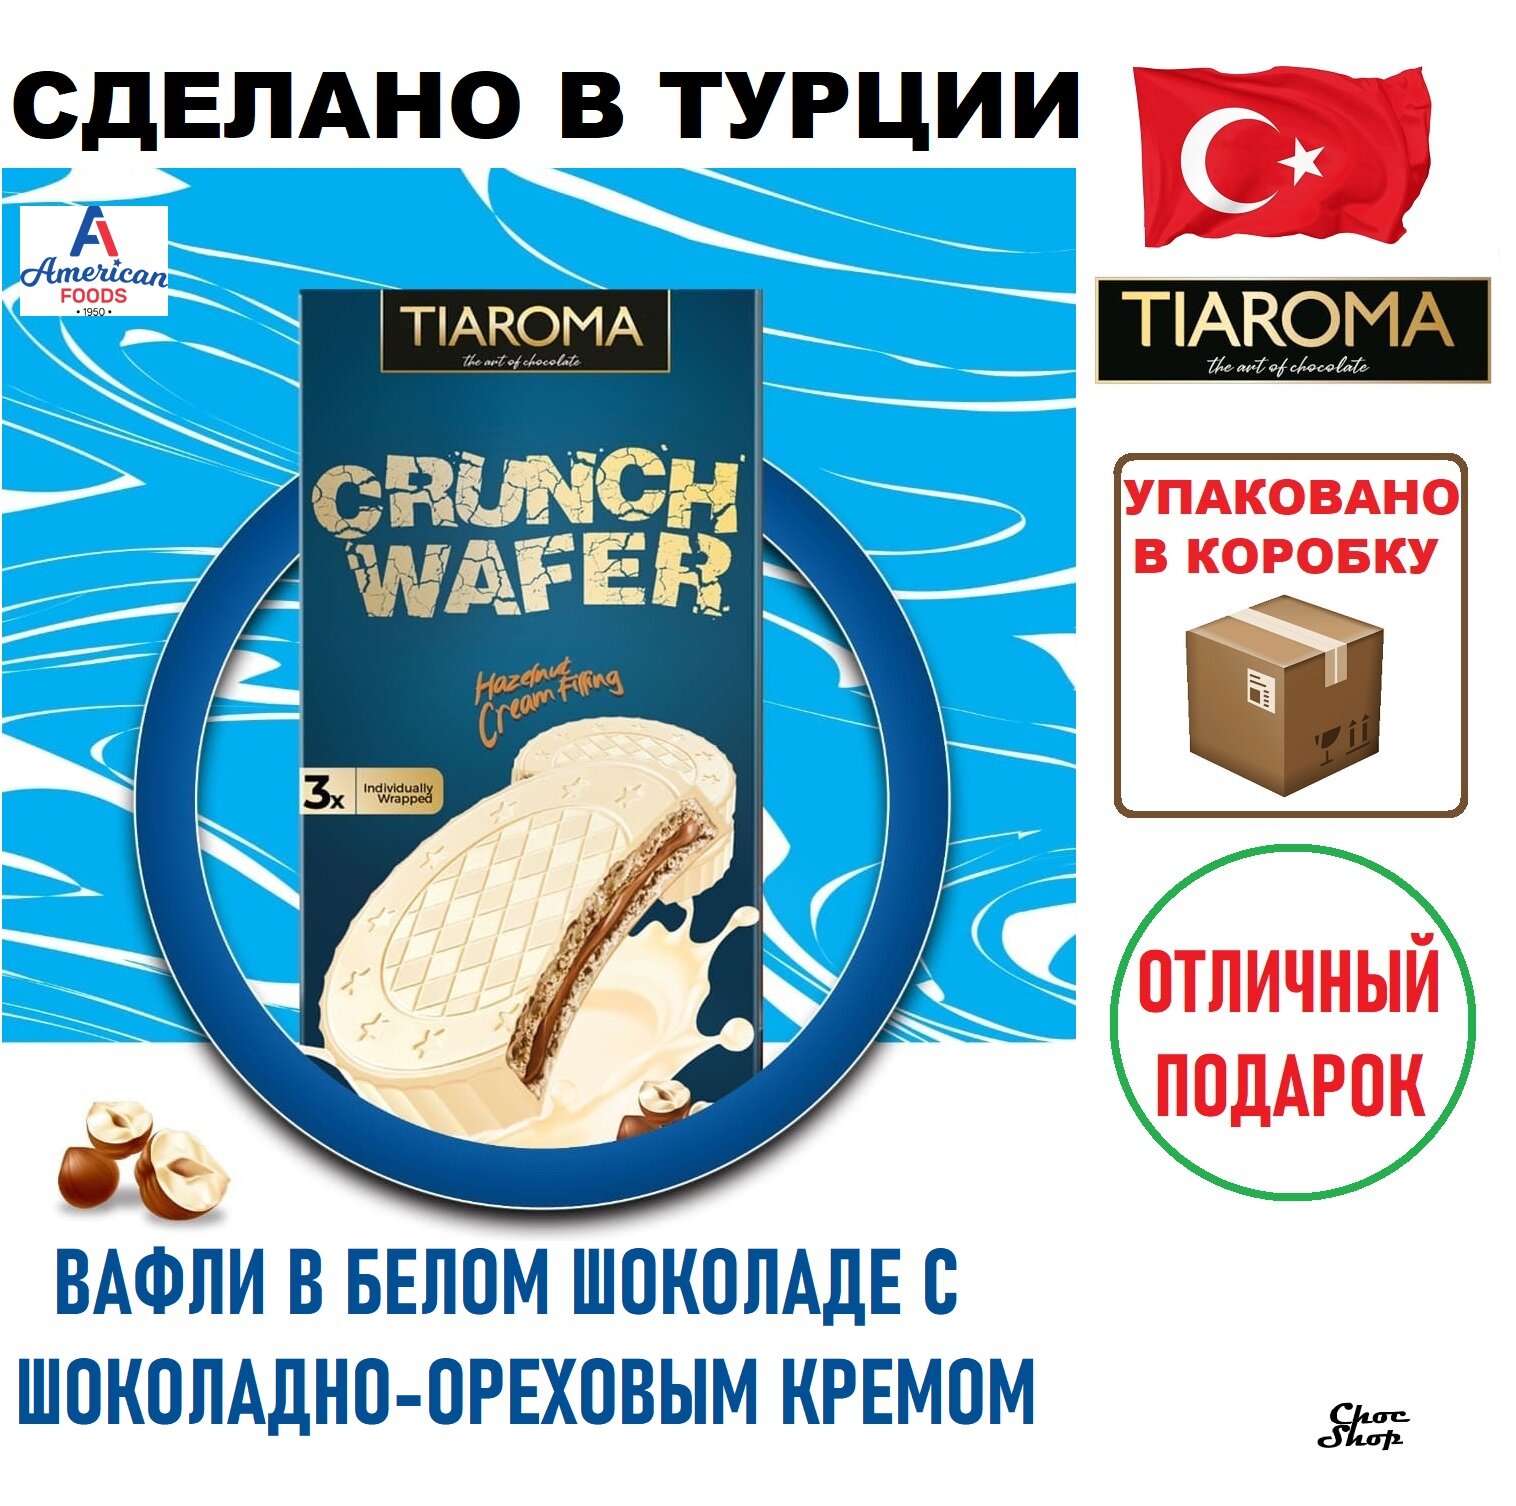 Вафли TIAROMA с кремом из лесного ореха в белом шоколаде нетто 60г (3Х20)